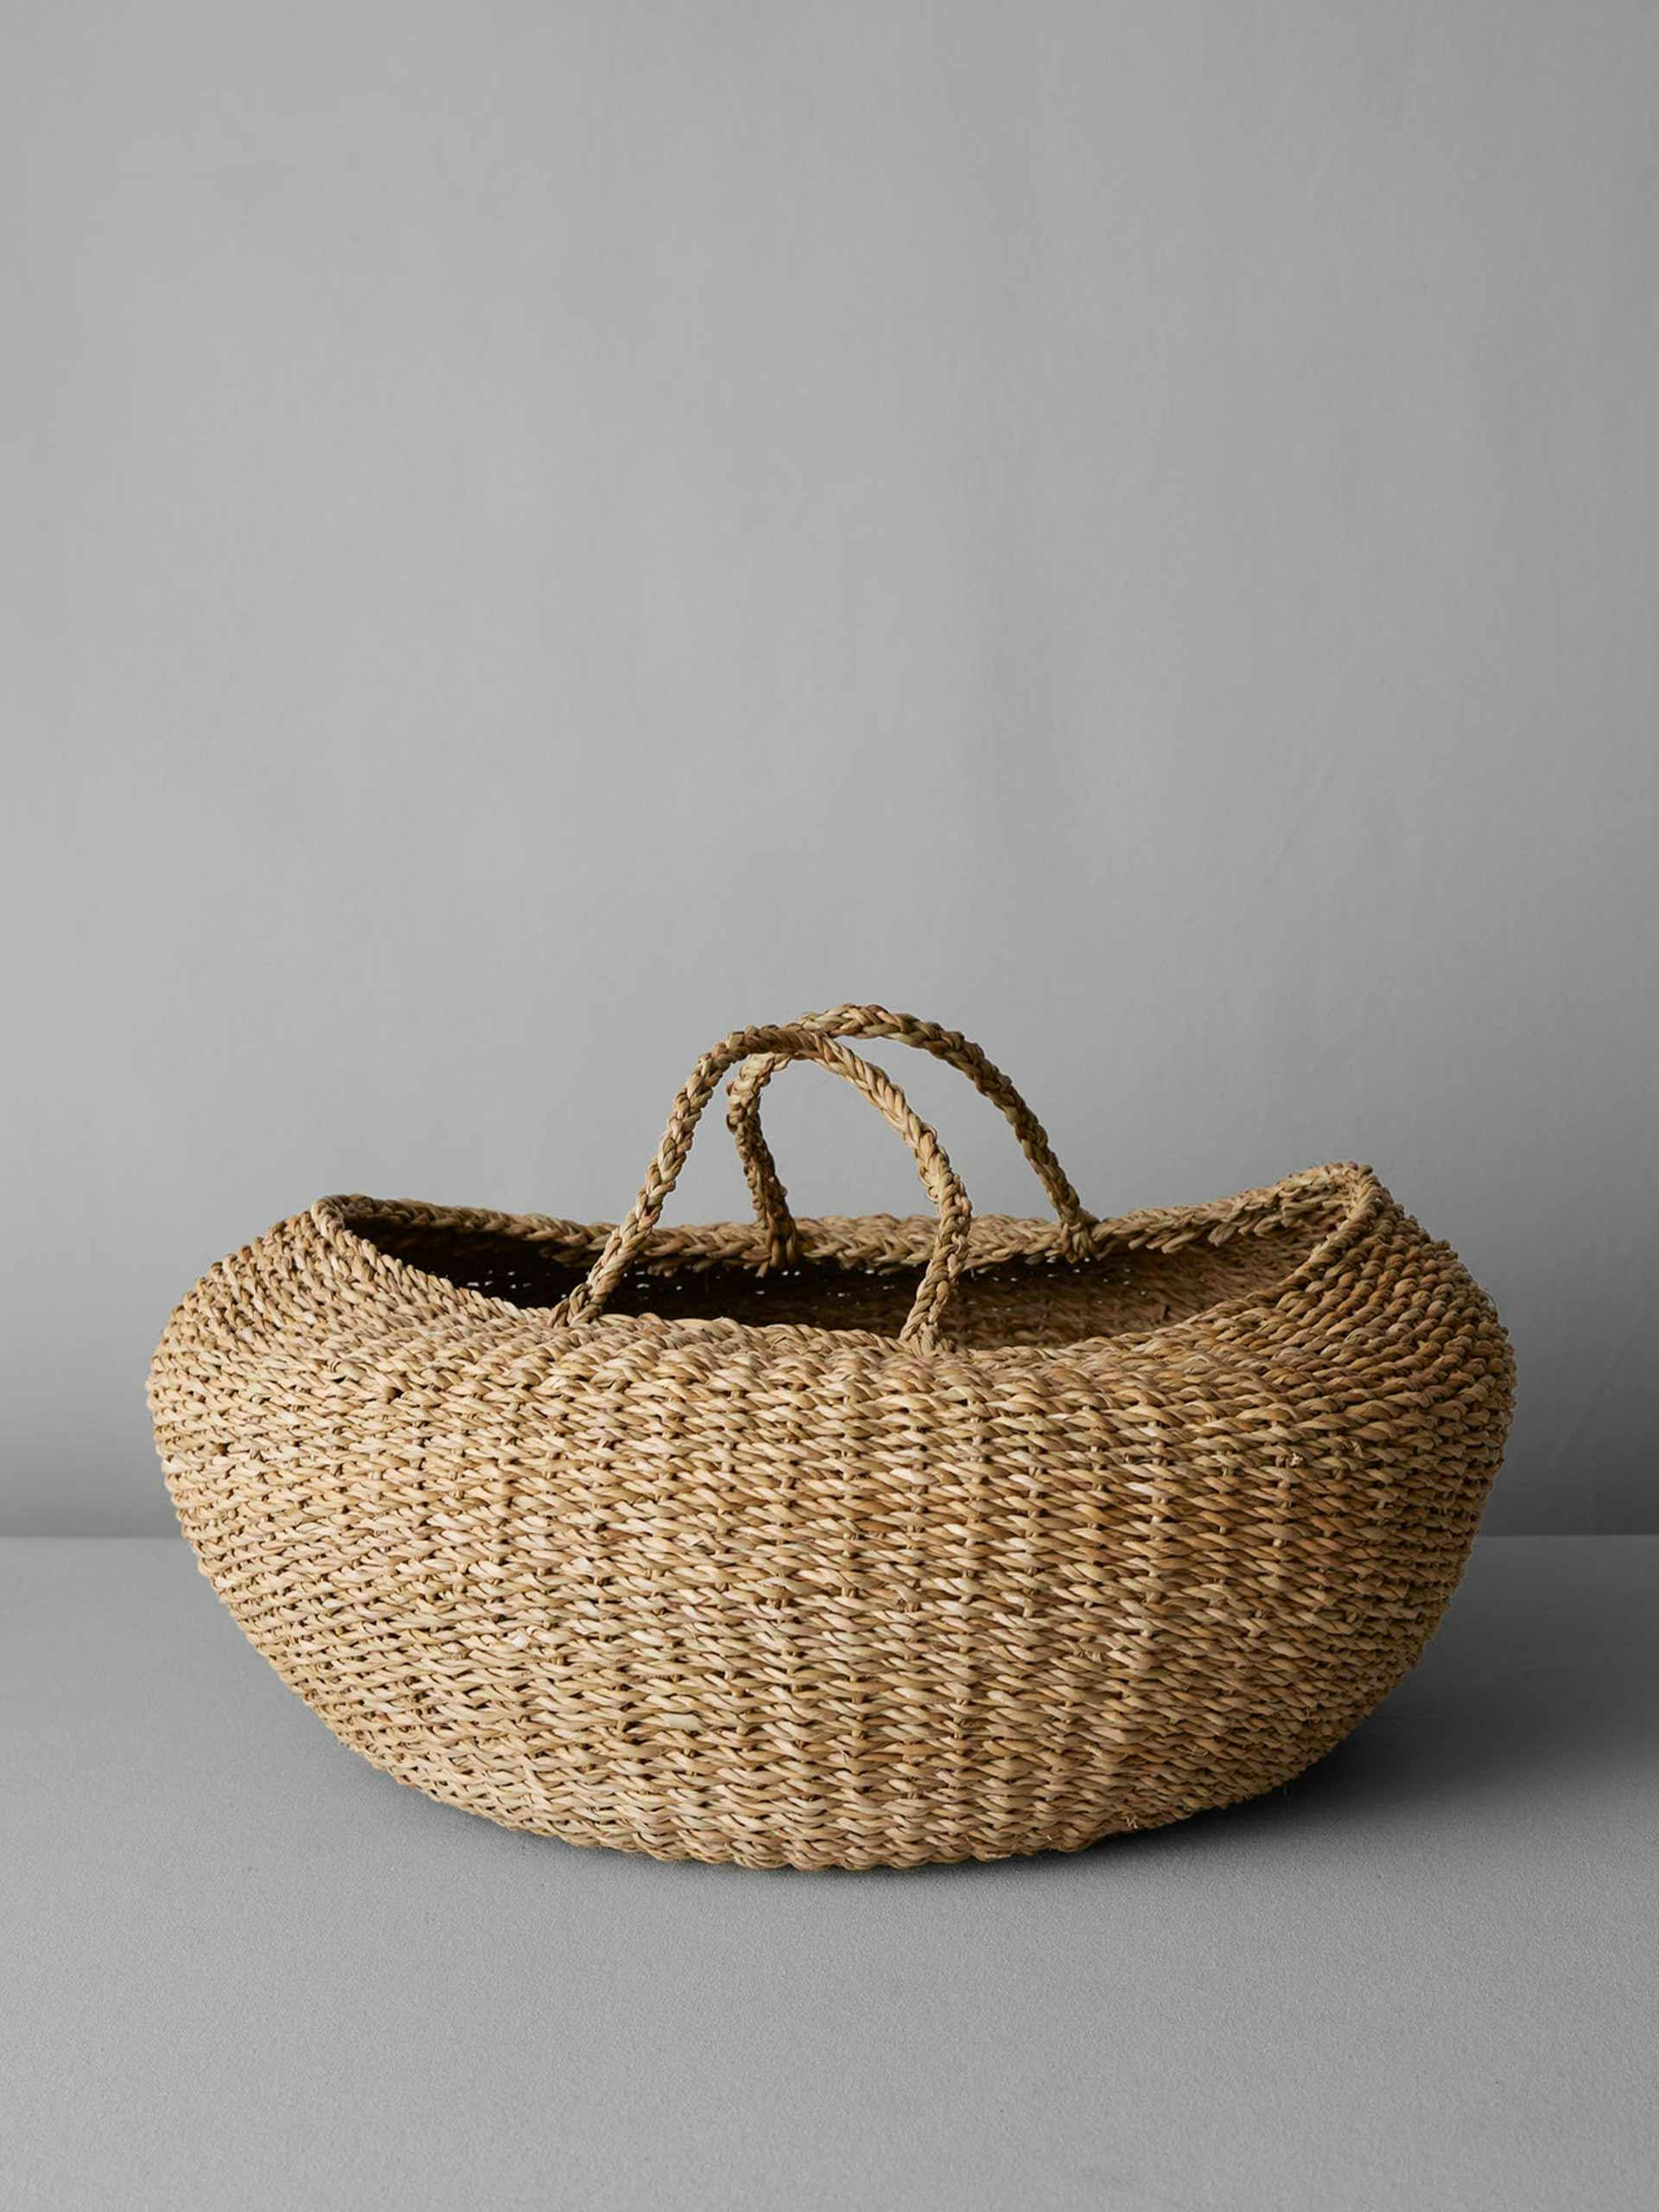 Round hogla storage basket